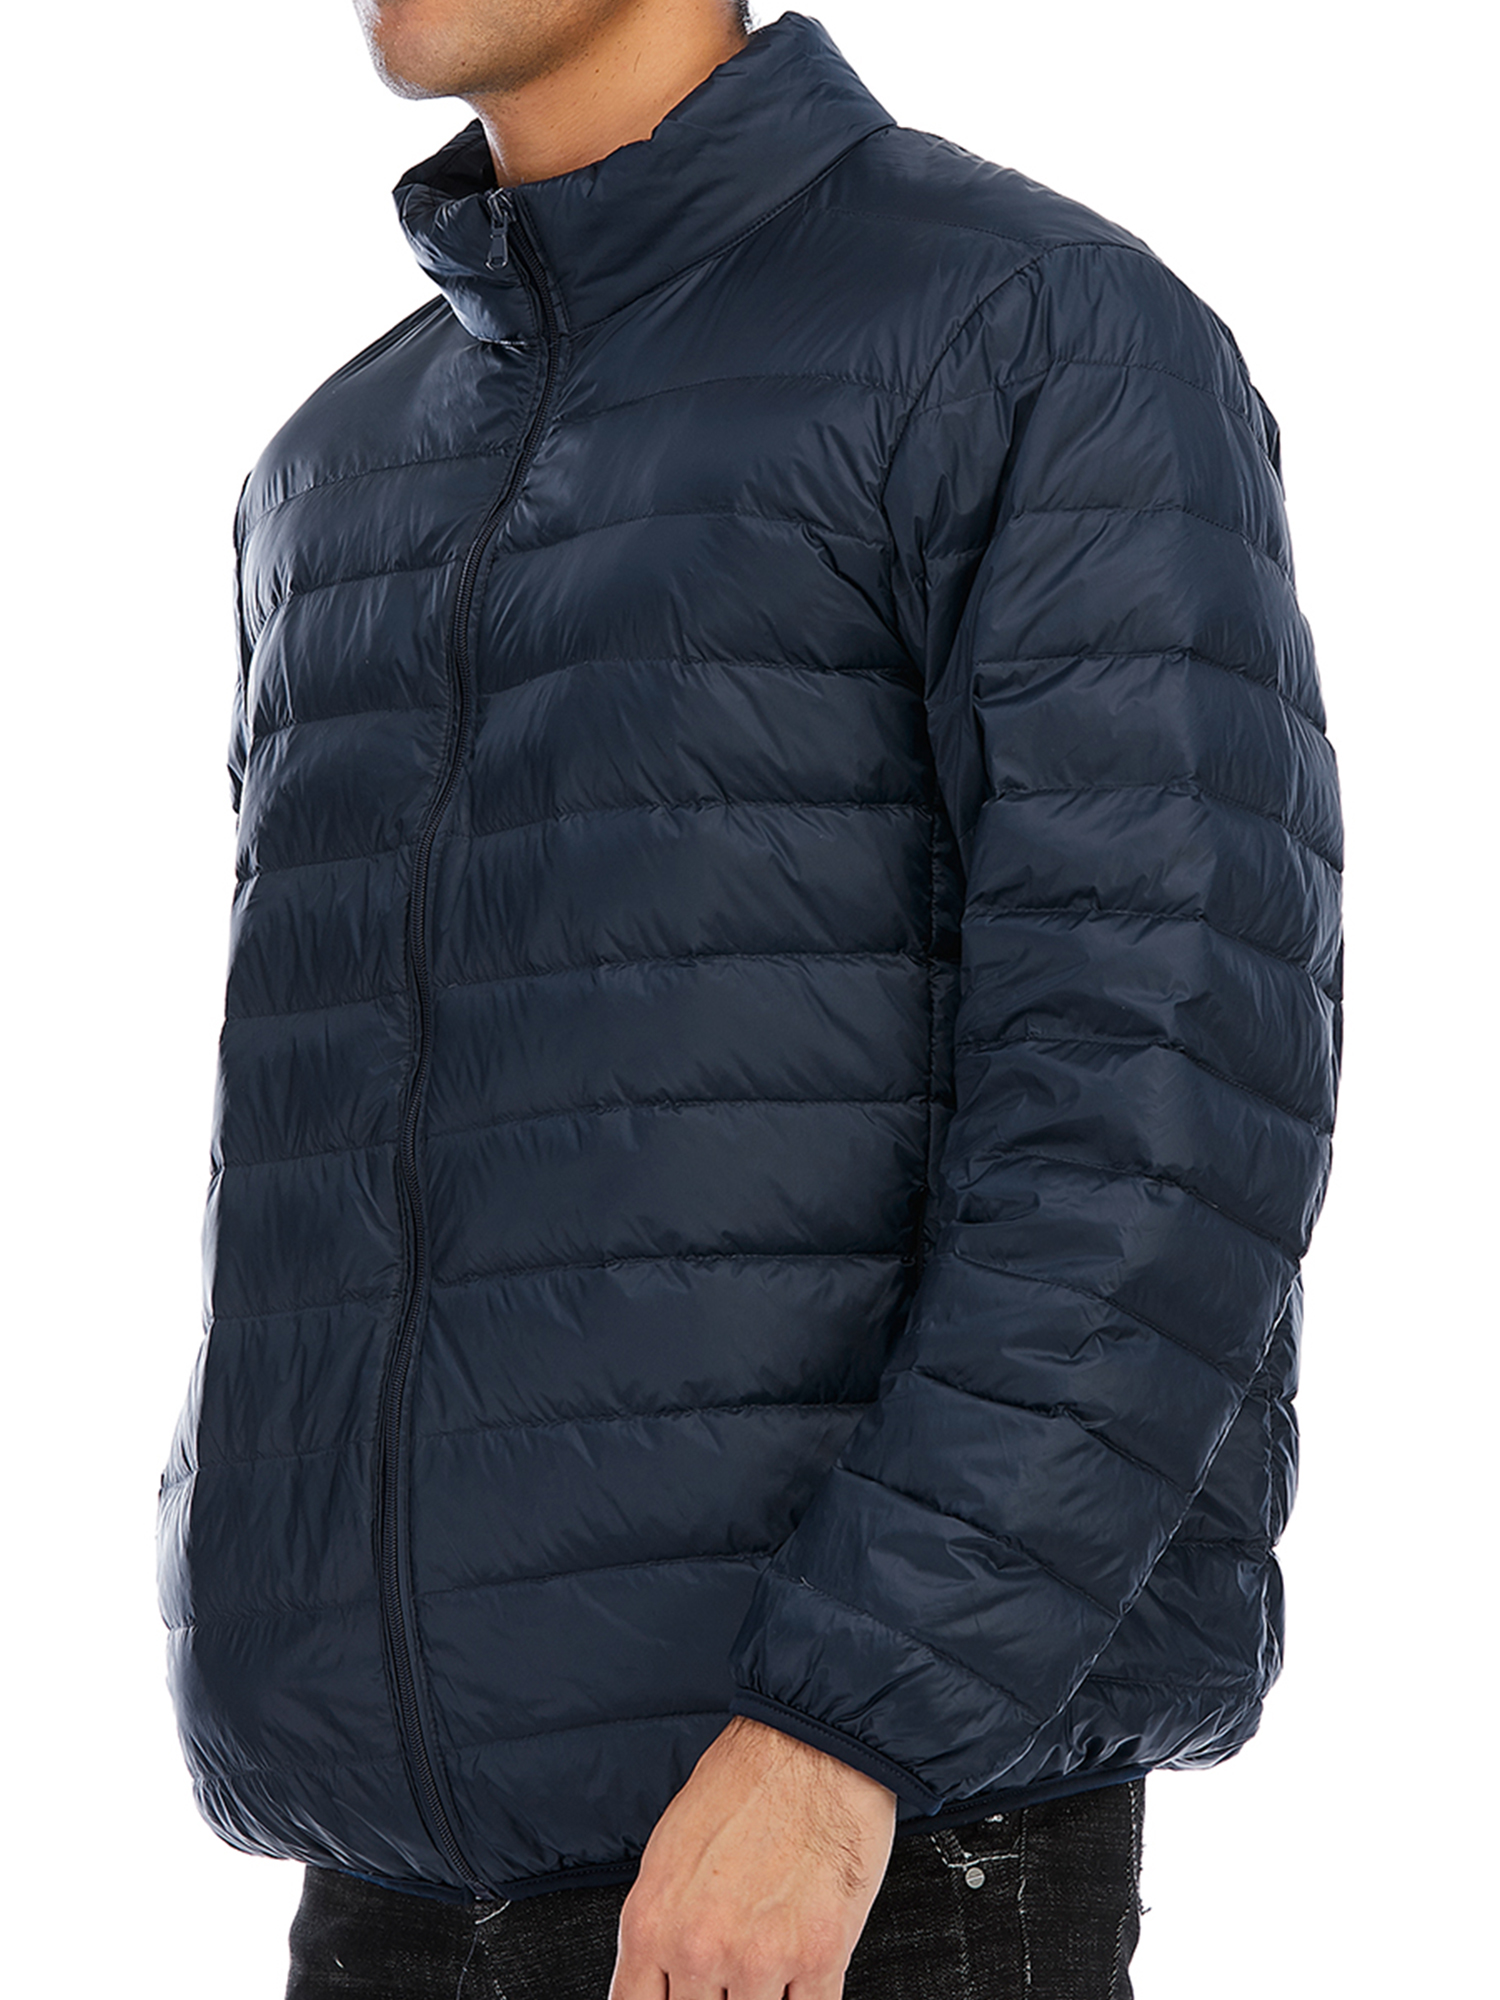 FOCUSSEXY Mens Down Jacket Mens Outwear Puffer Coats Zip Up Windbreaker Lightweight Winter Jackets Packable Warm Coat Stretch Winter Coat - image 5 of 7